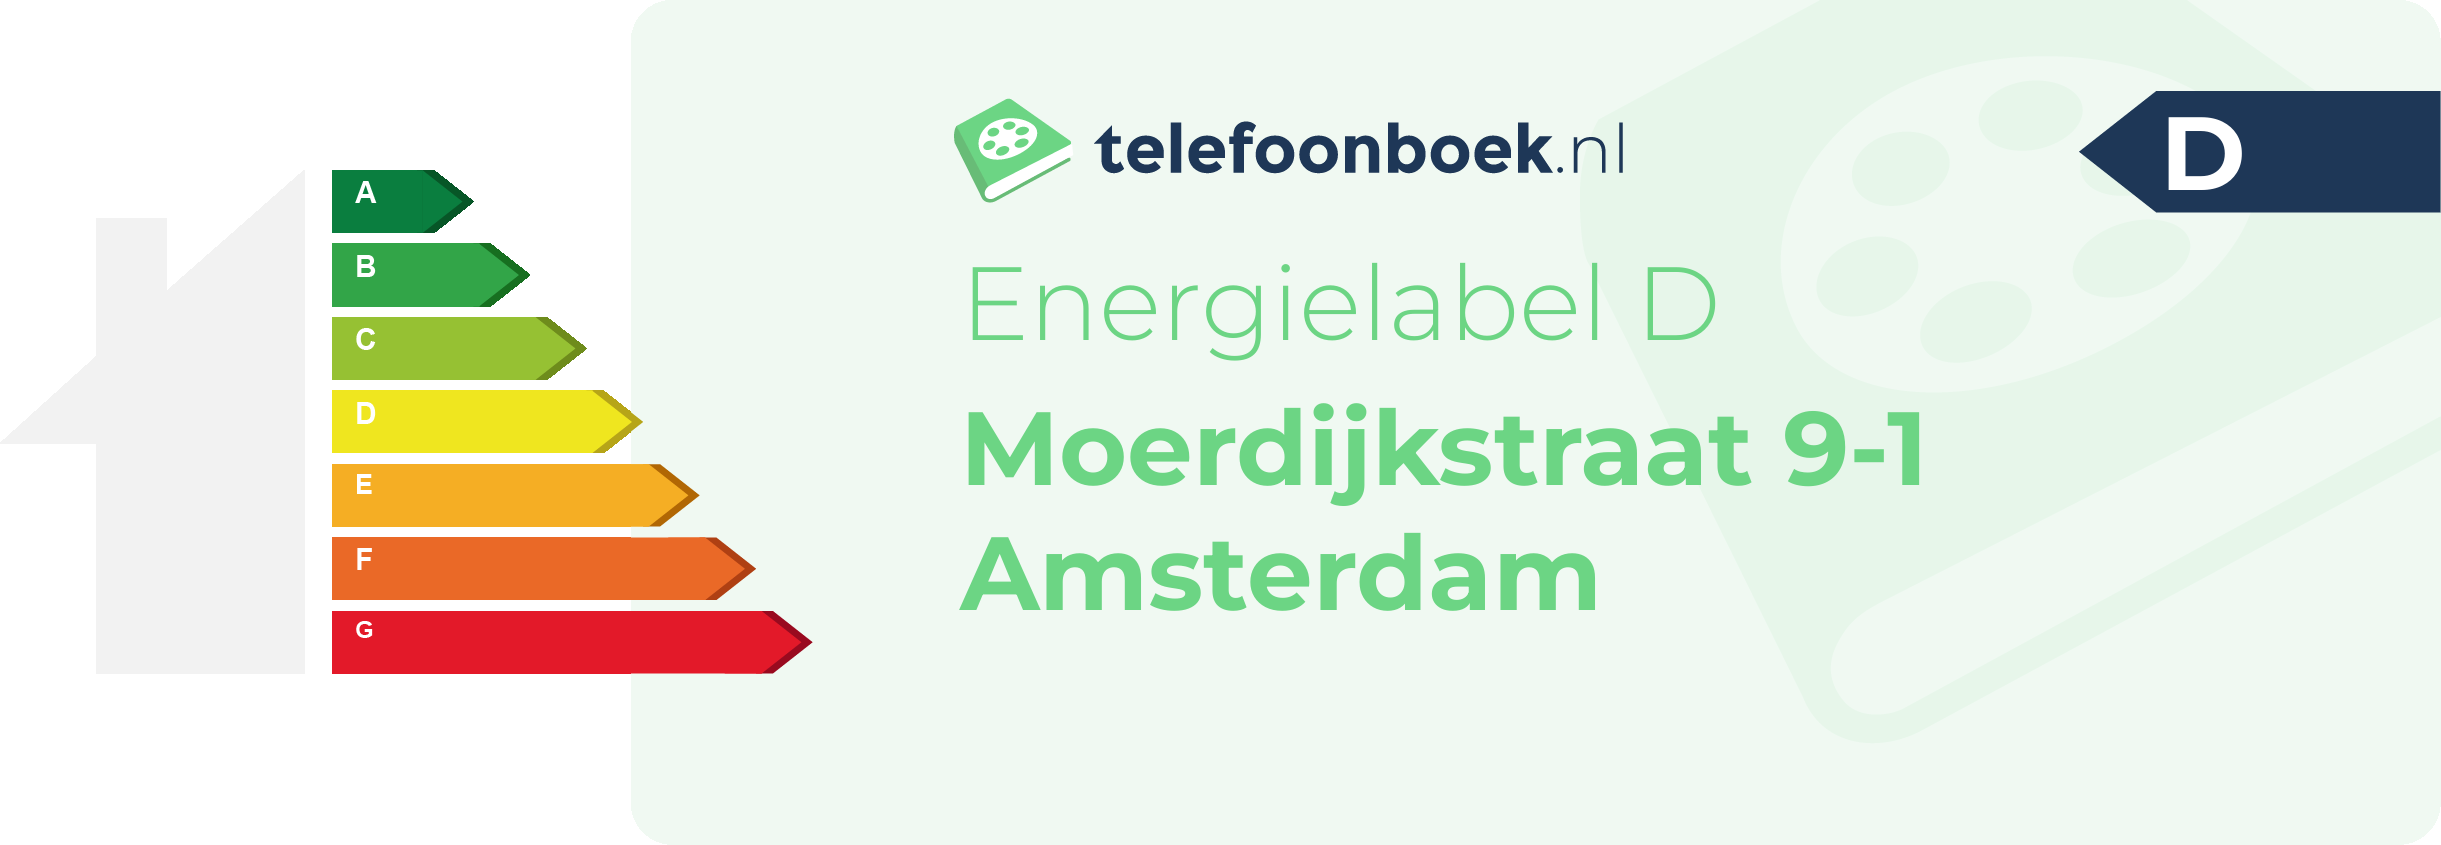 Energielabel Moerdijkstraat 9-1 Amsterdam